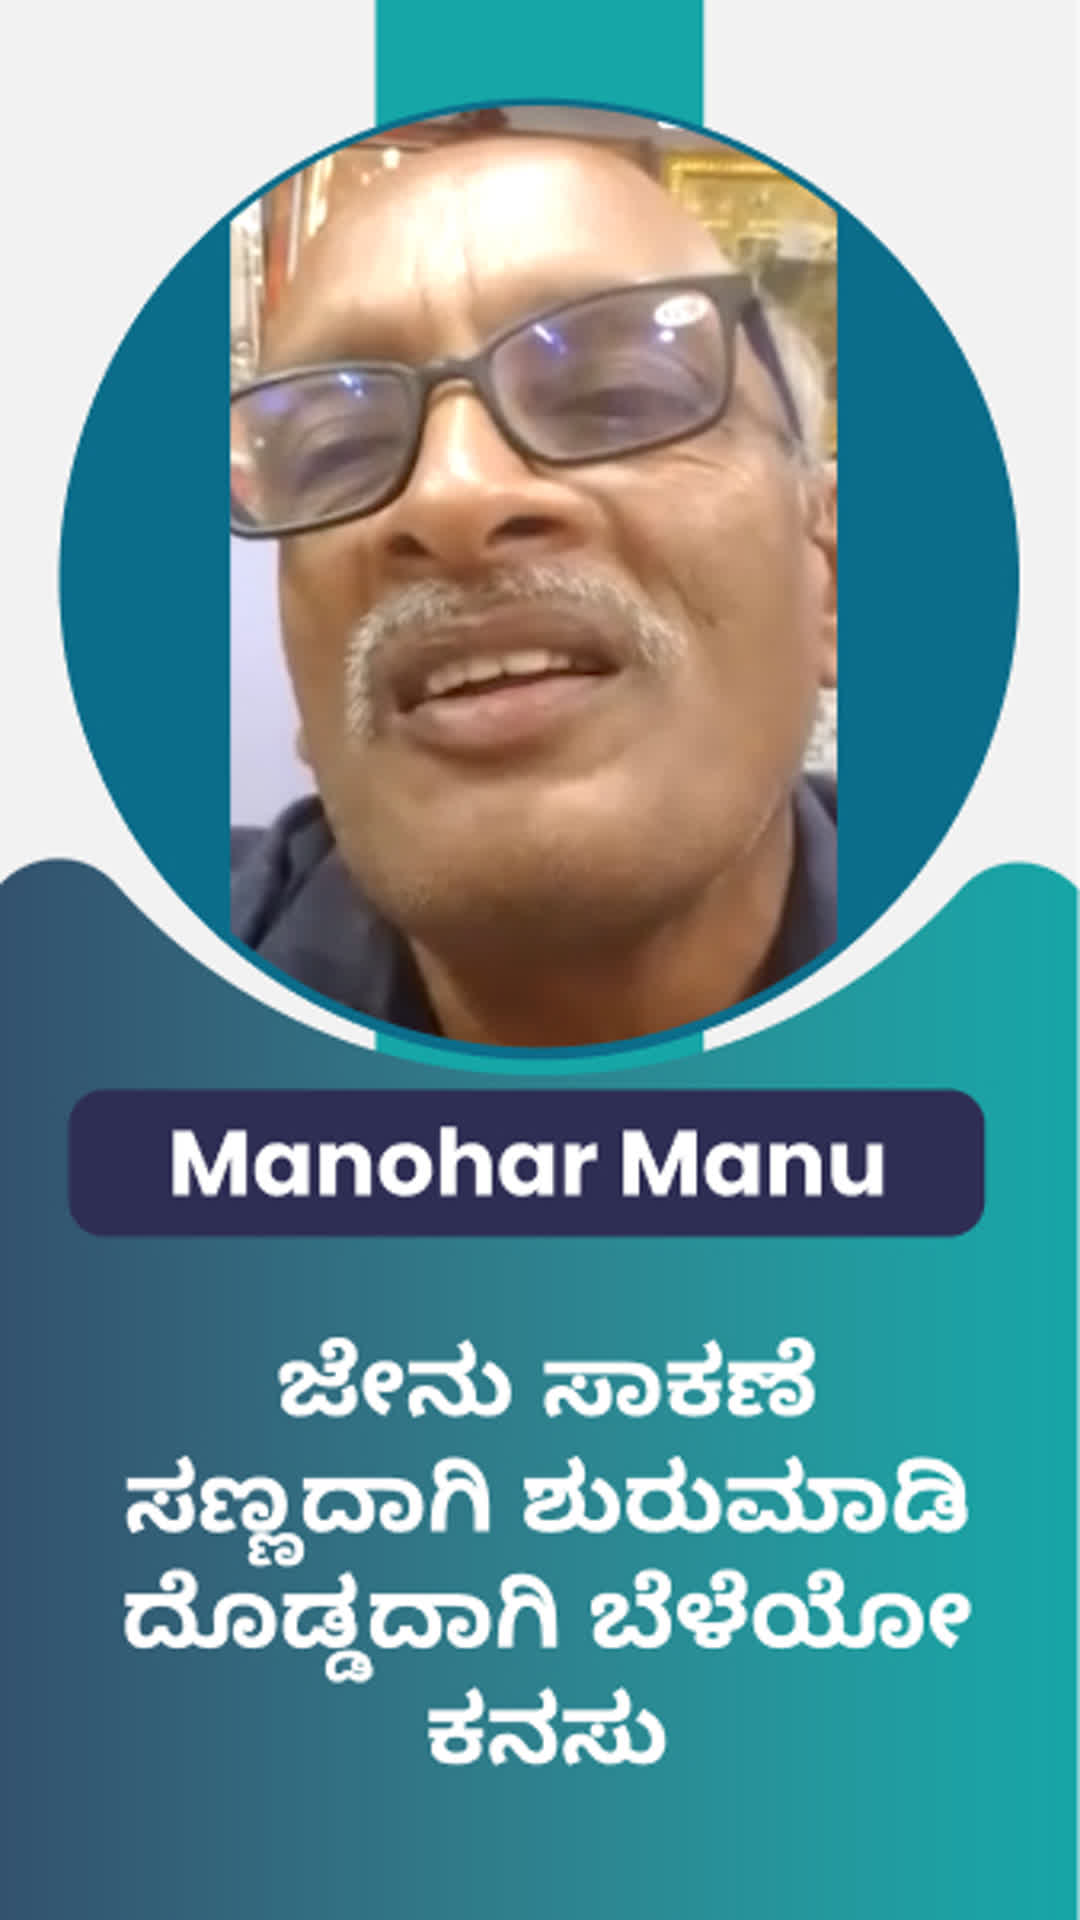 R manohar's Honest Review of ffreedom app - Bengaluru City ,Karnataka